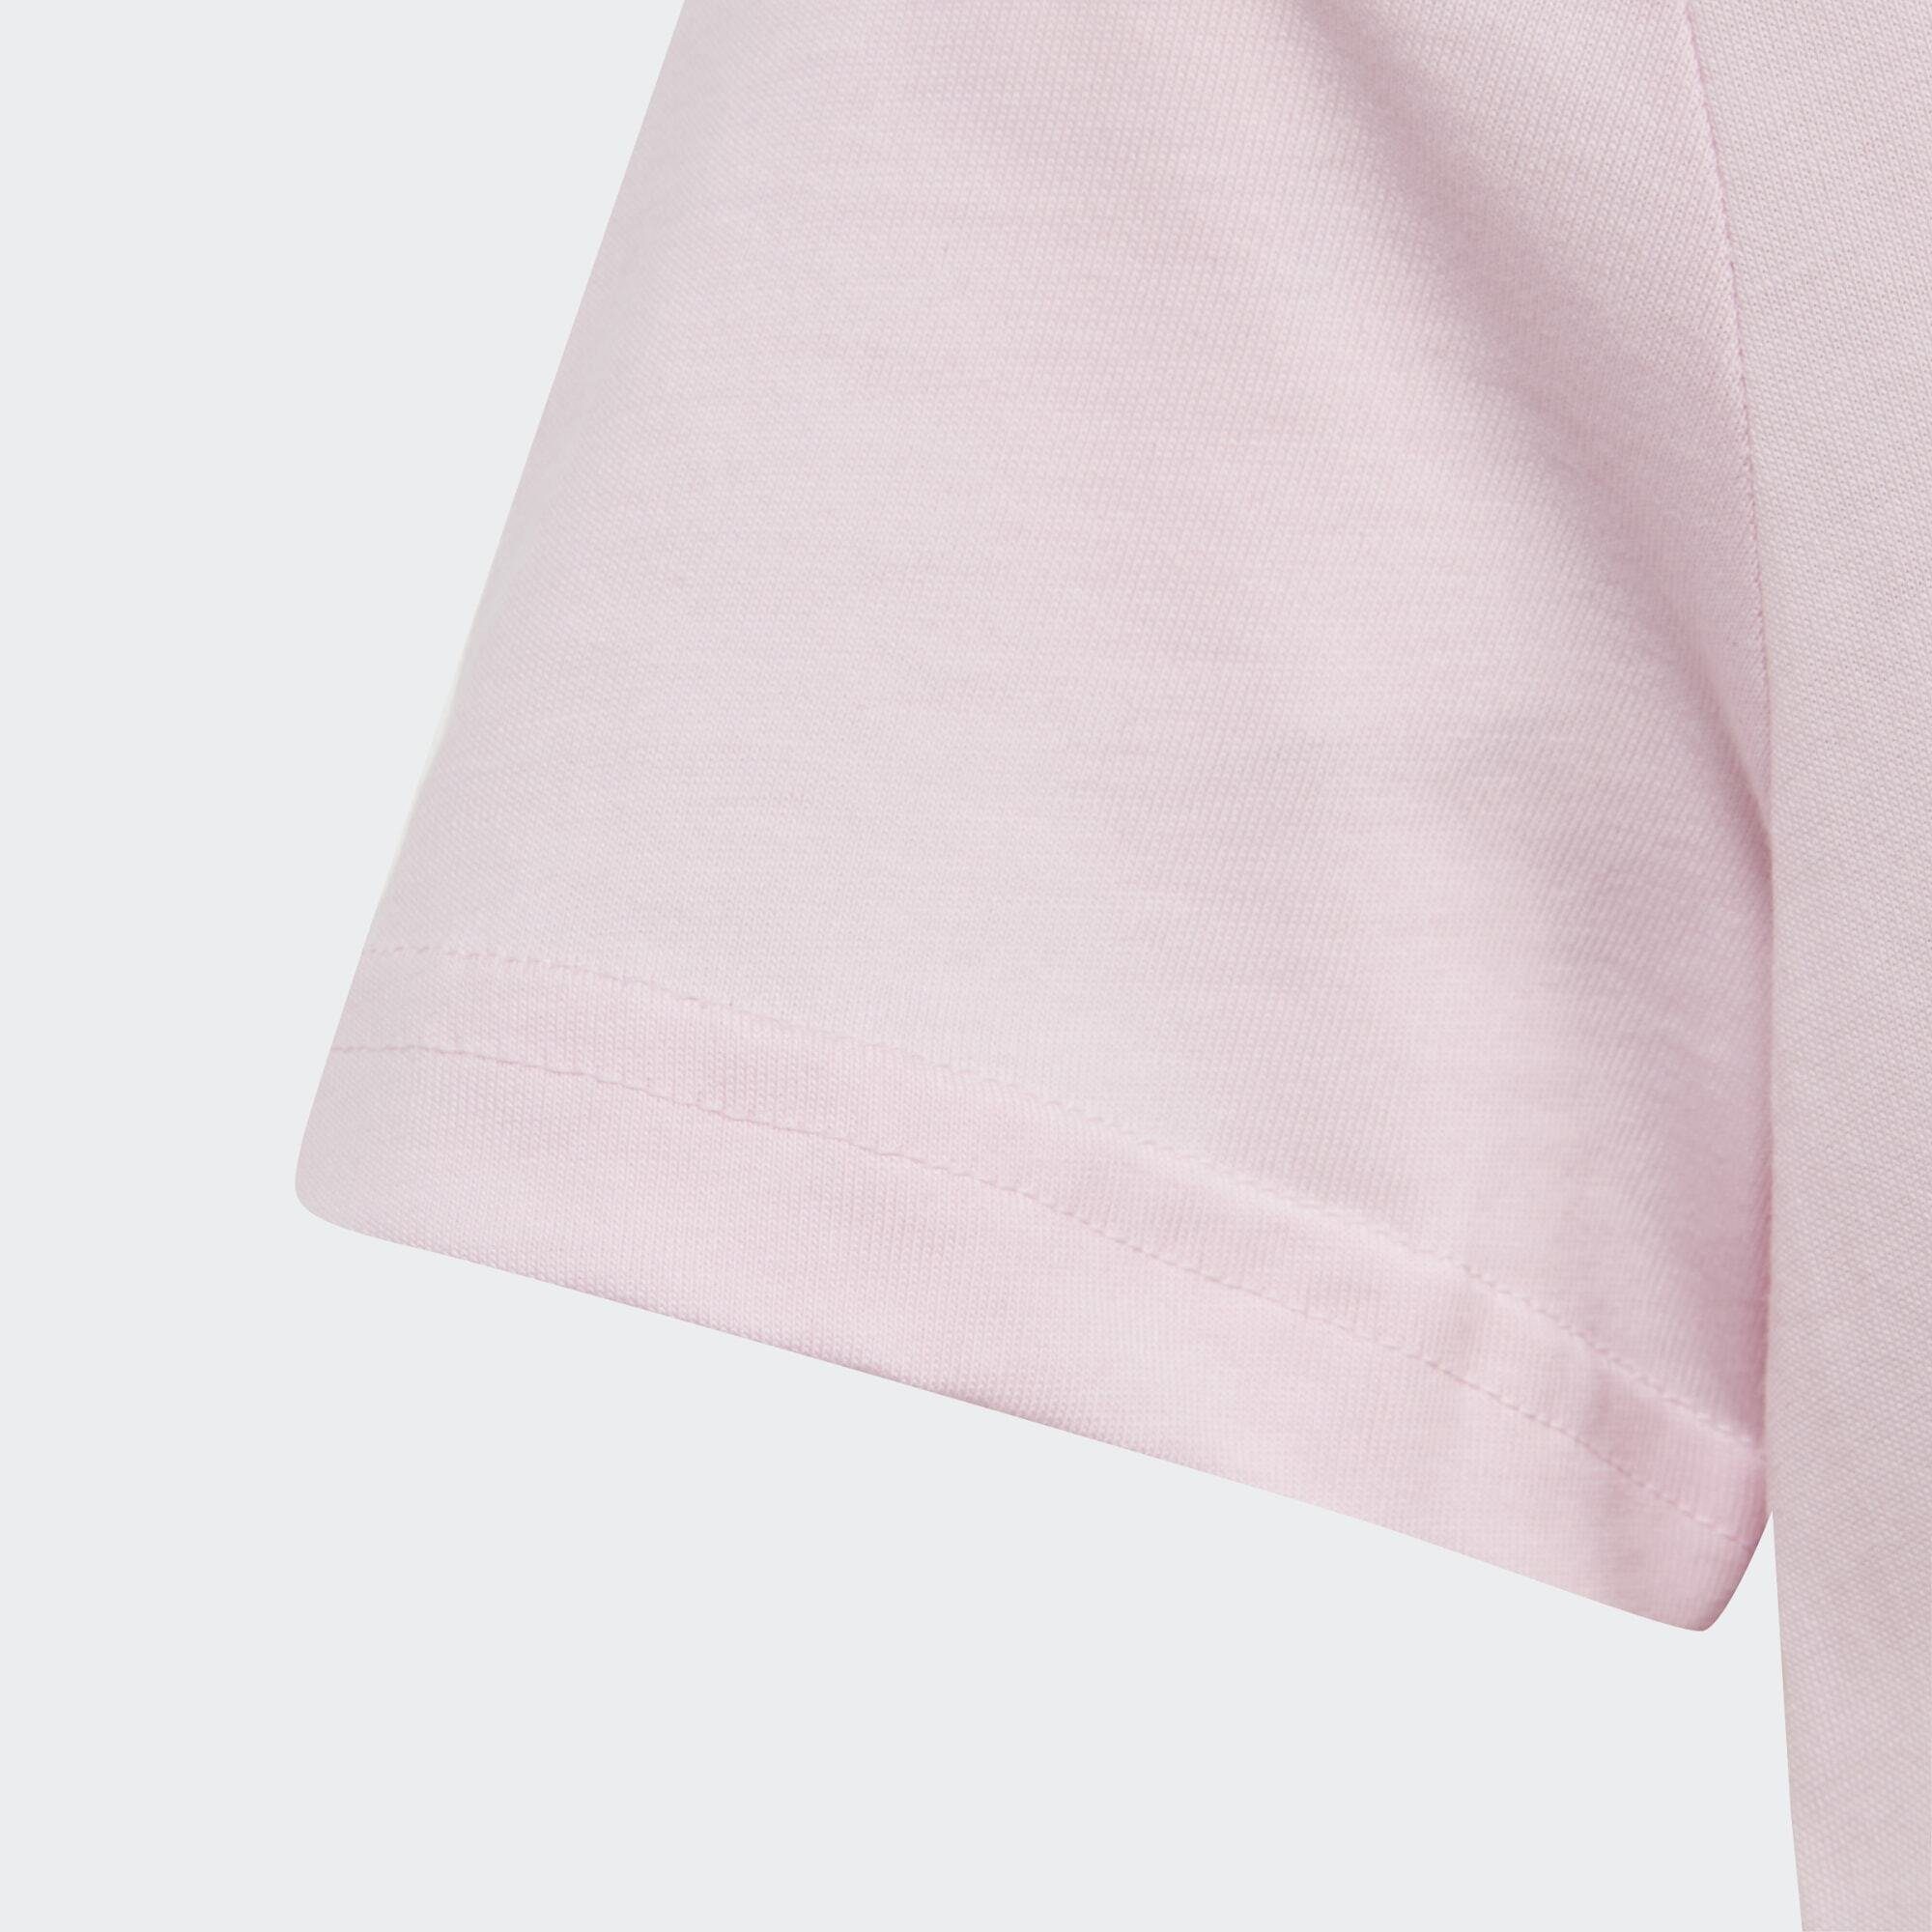 adidas Sportswear T-Shirt ESSENTIALS LINEAR COTTON Clear / FIT Pink White LOGO T-SHIRT SLIM